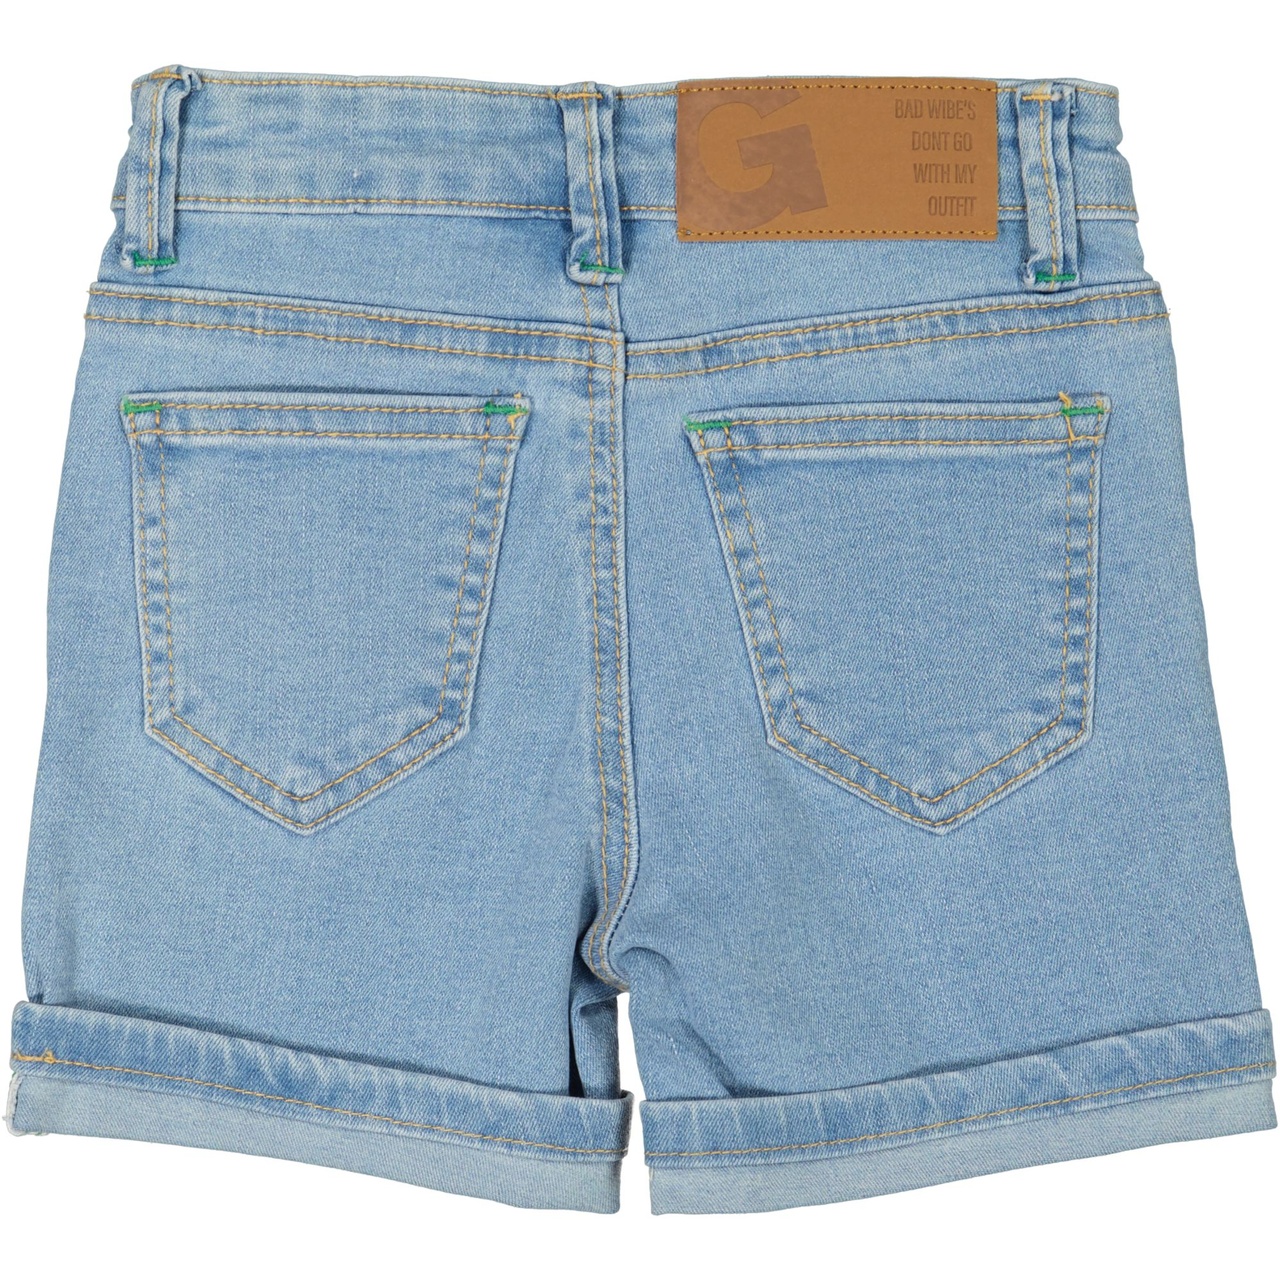 Unisex 5-pocket shorts Denim l.blue wash 110/116